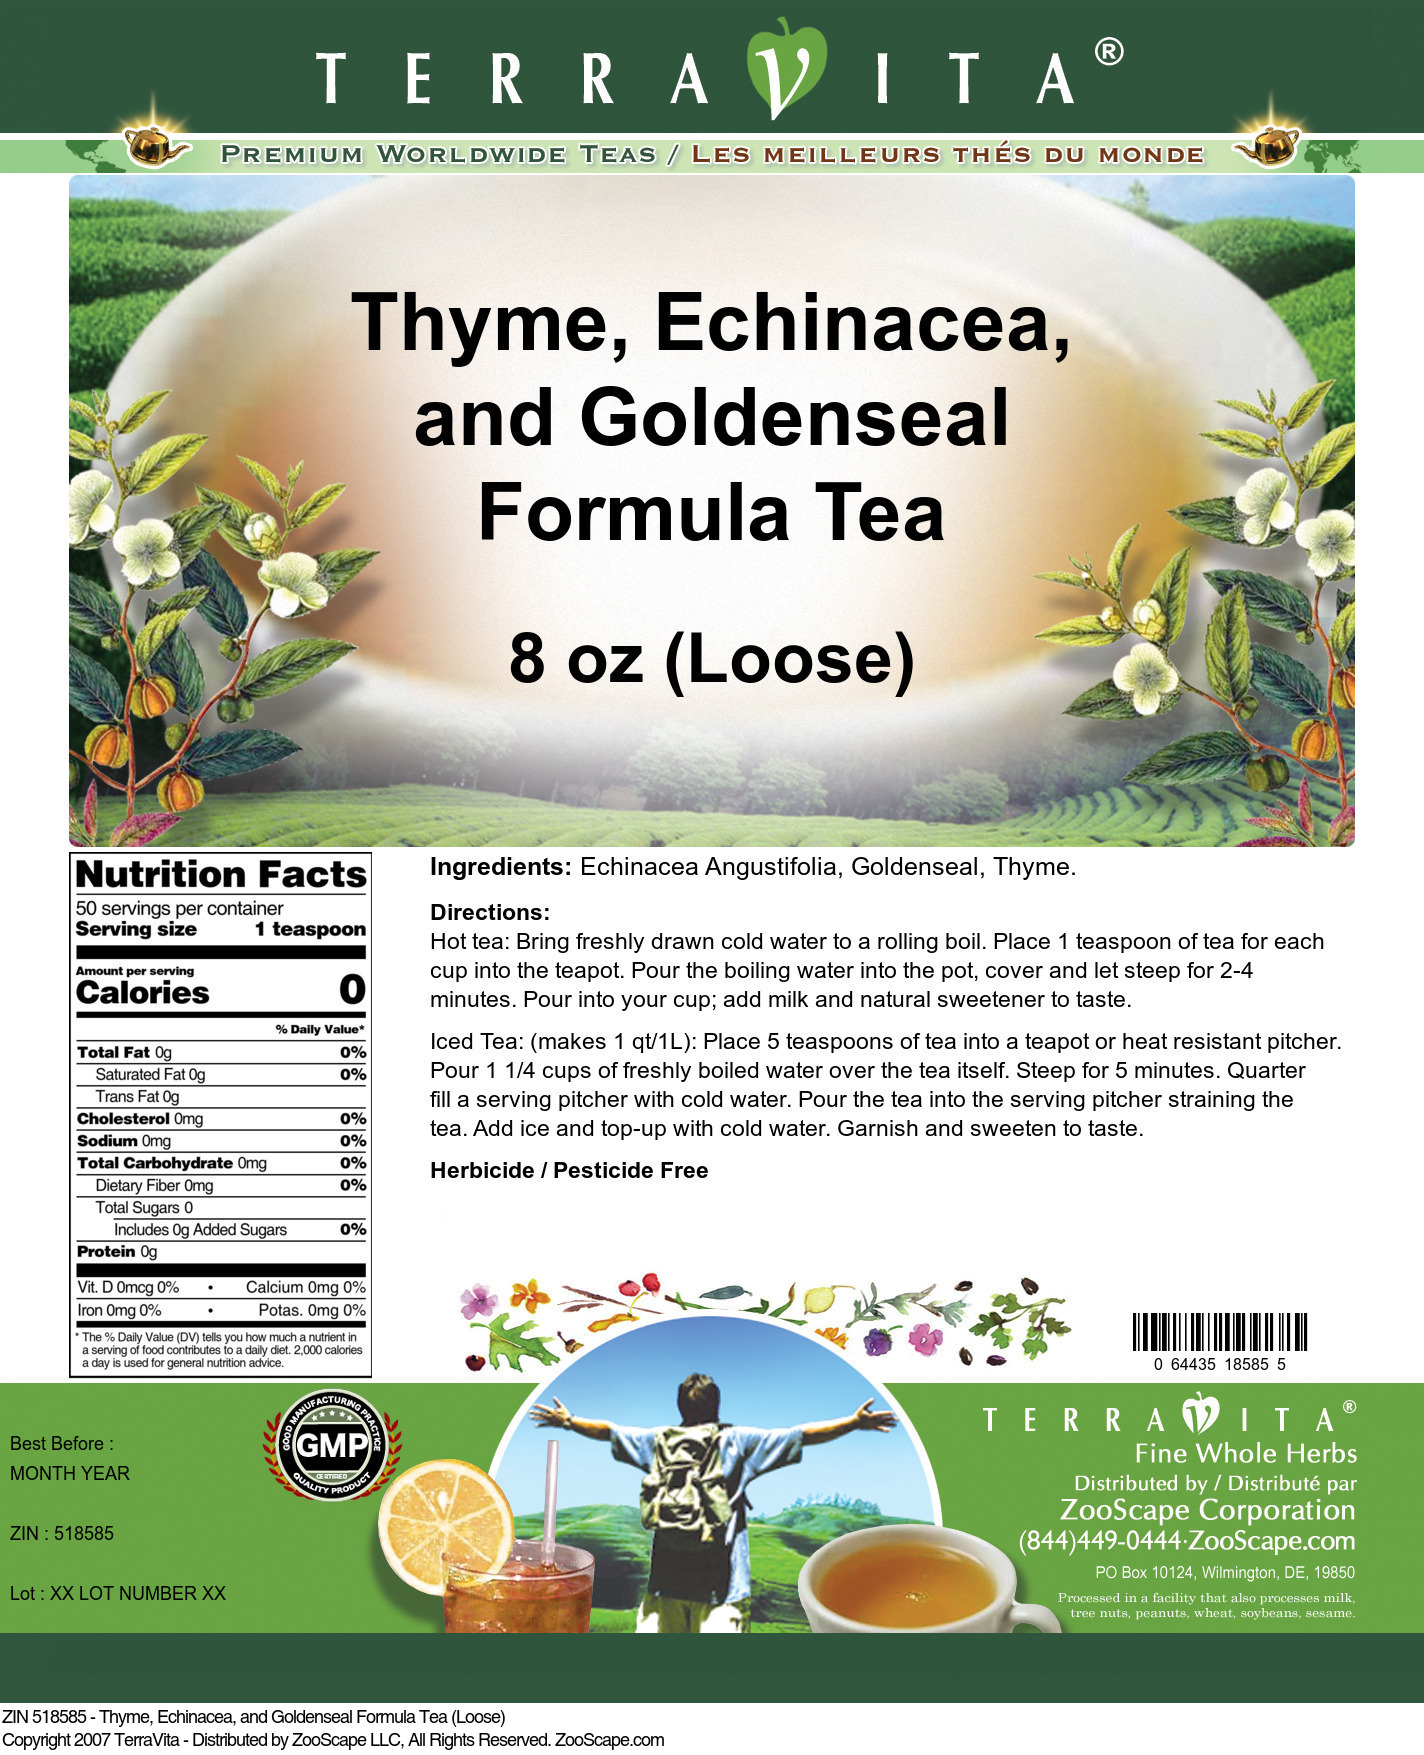 Thyme, Echinacea, and Goldenseal Formula Tea (Loose) - Label